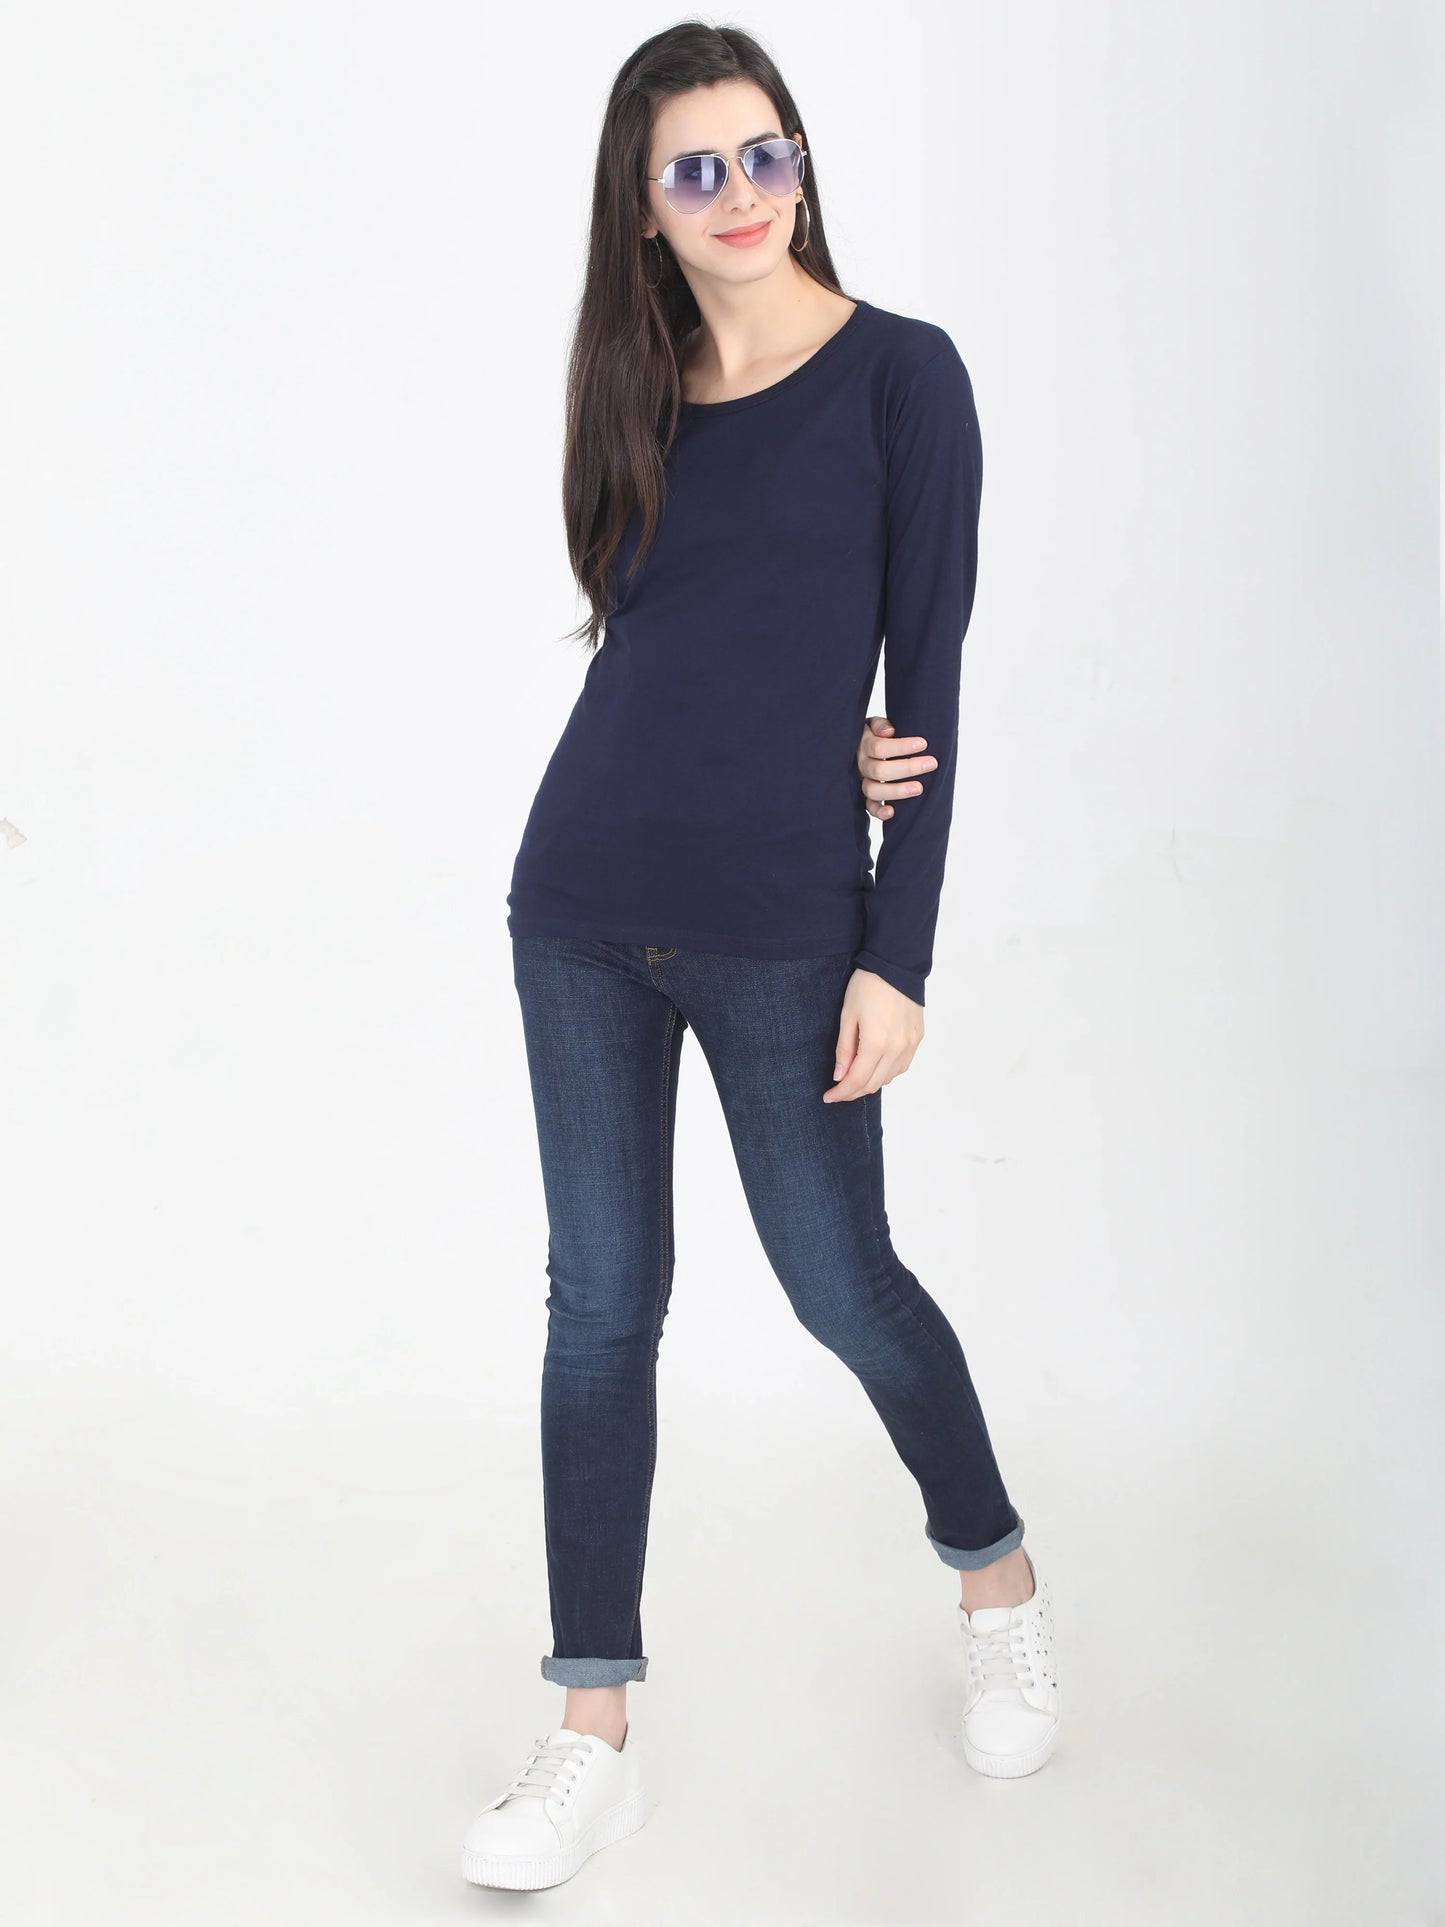 Women's Cotton Plain Round Neck Full Sleeve Navy Blue Color T-Shirt